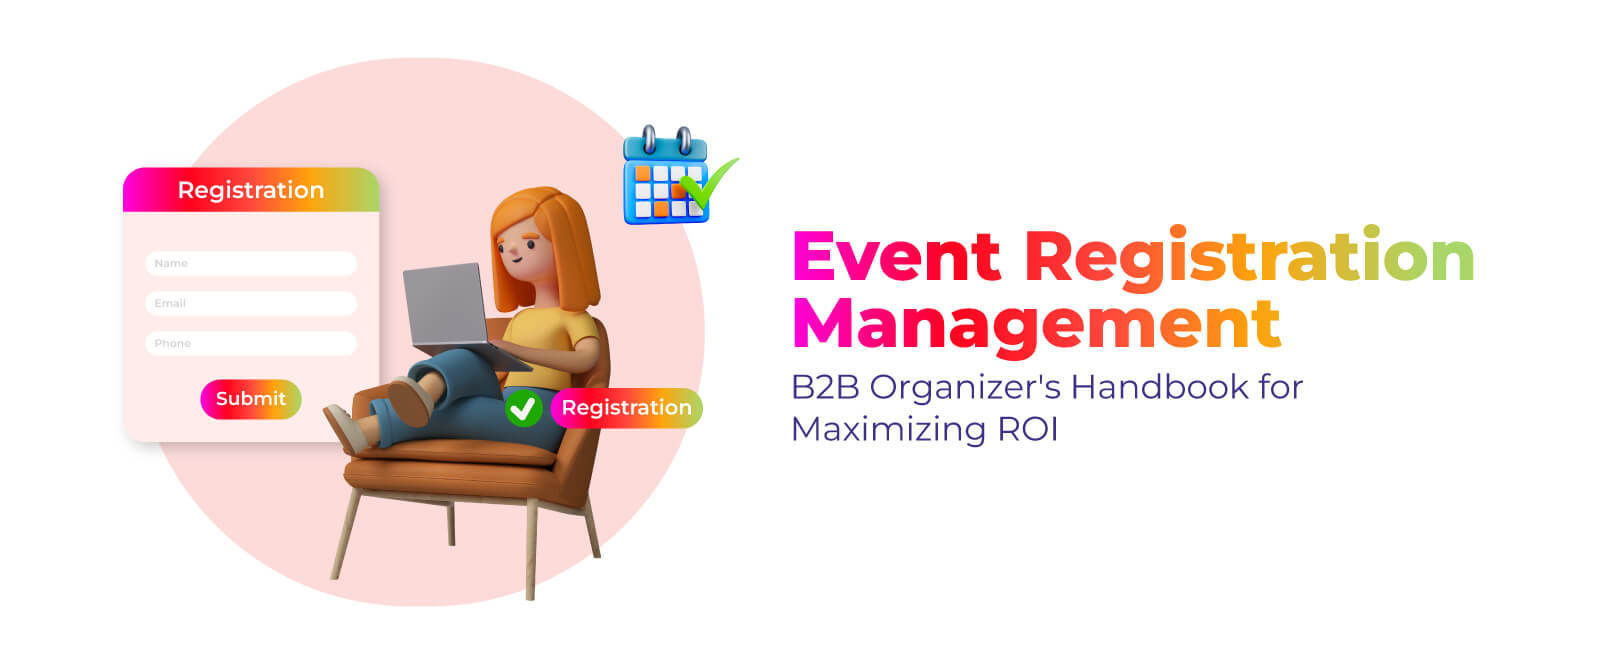 Event Registration Management: B2B Organizer’s Handbook for Maximizing ROI